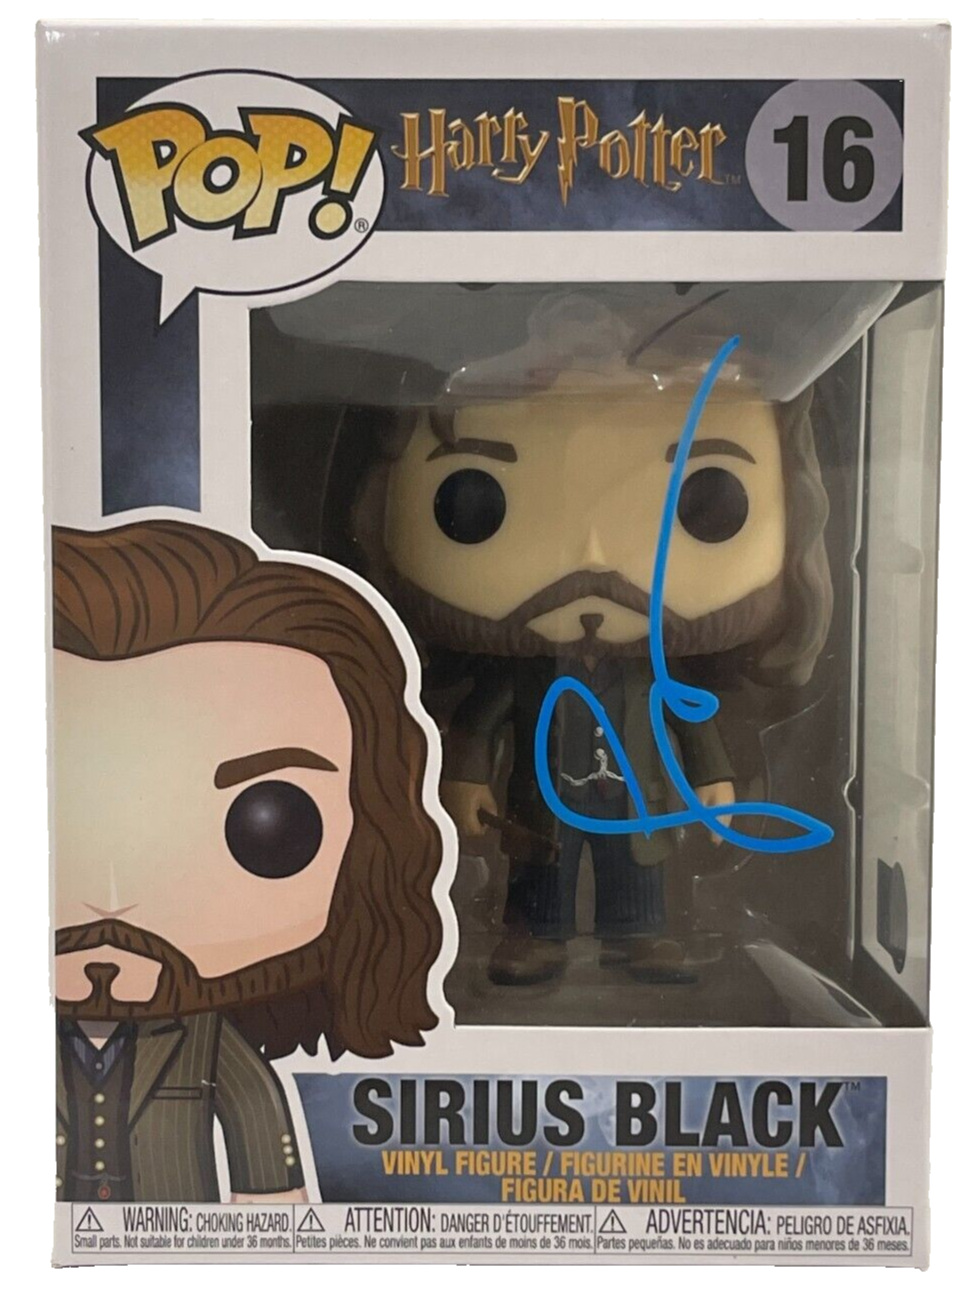 Buy Pop! Sirius Black at Funko.